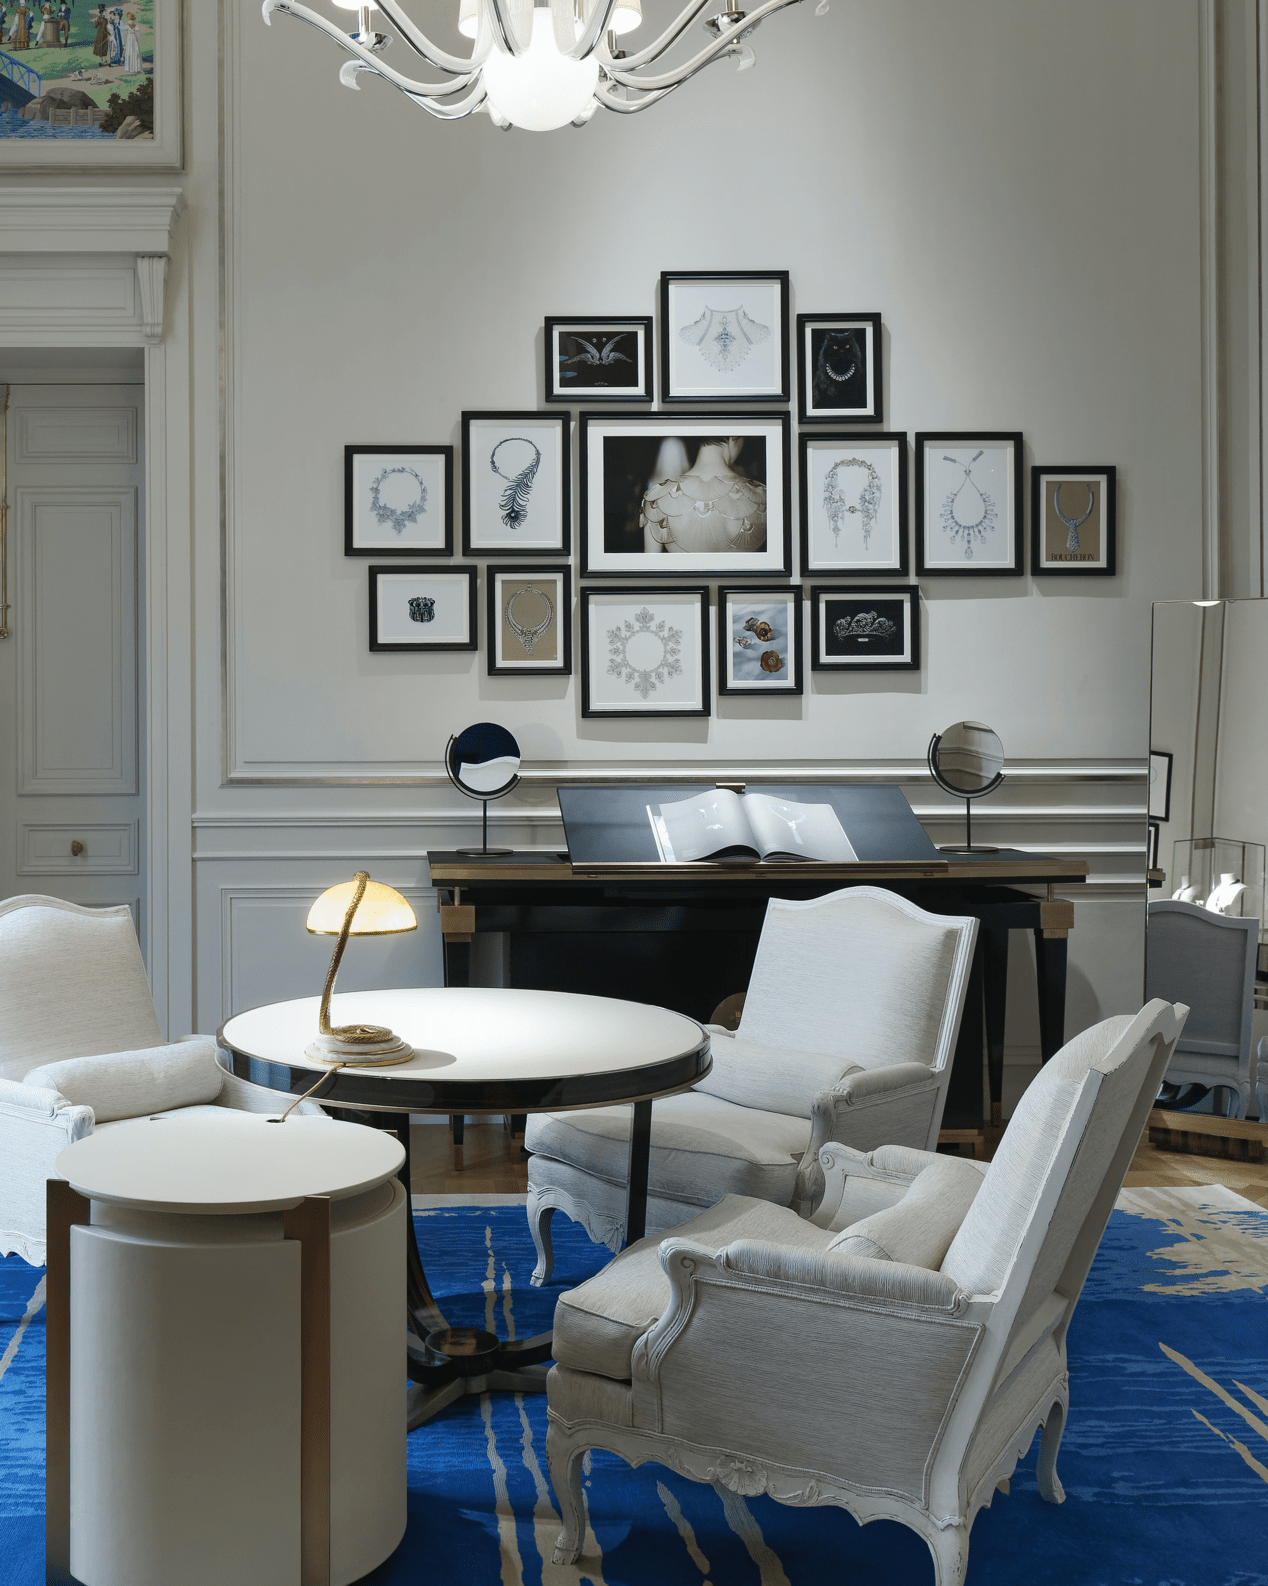 Boucheron Flagship Salon des Créations (The Creation Room) – second floor